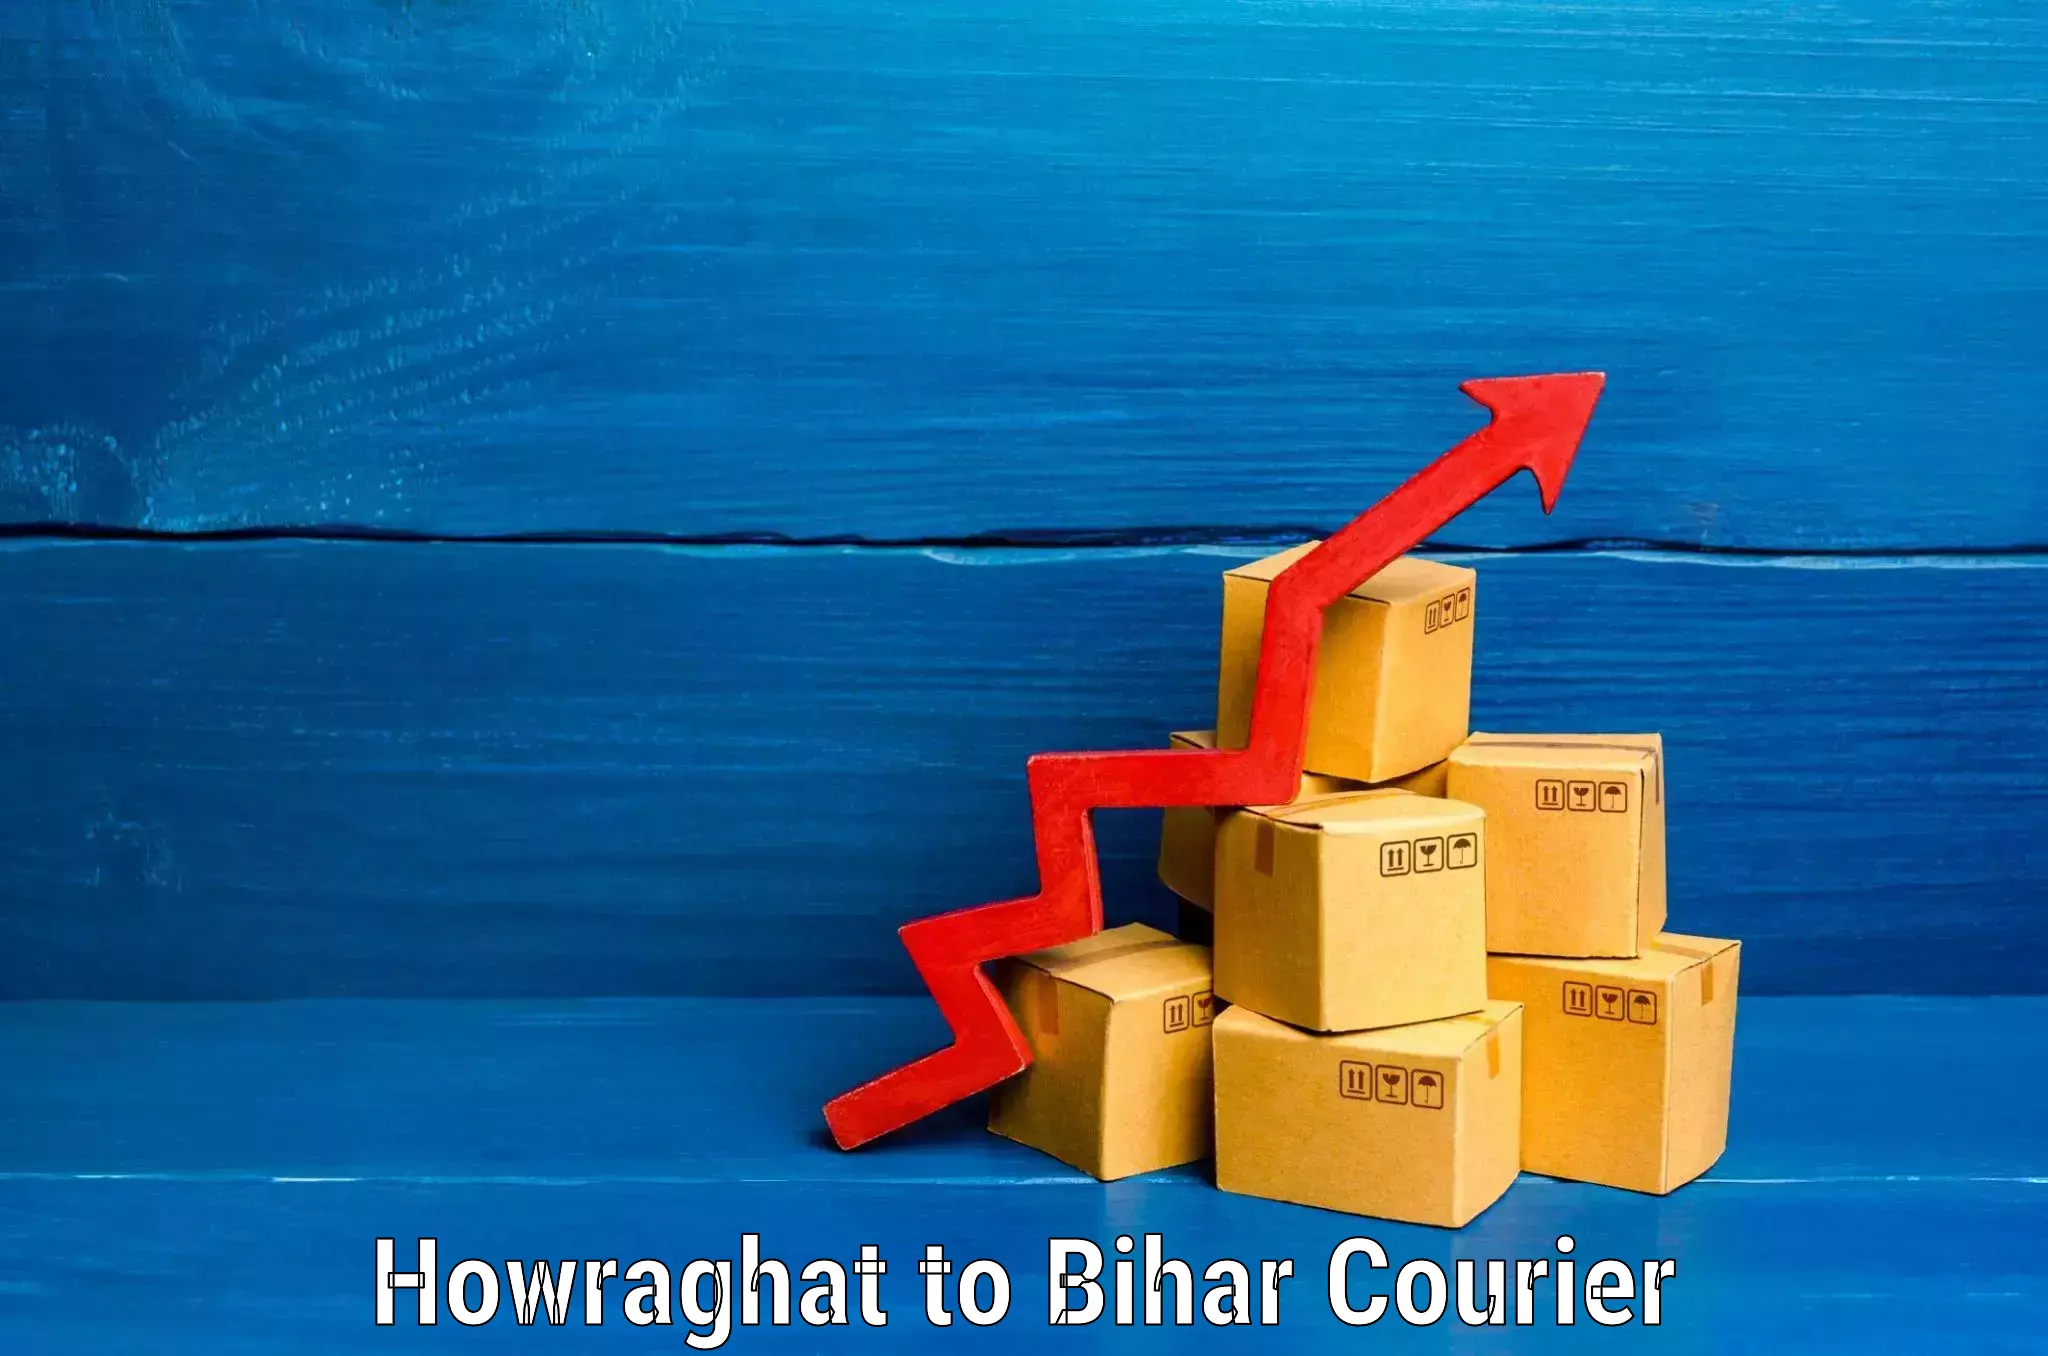 Luggage transport service Howraghat to Bihar